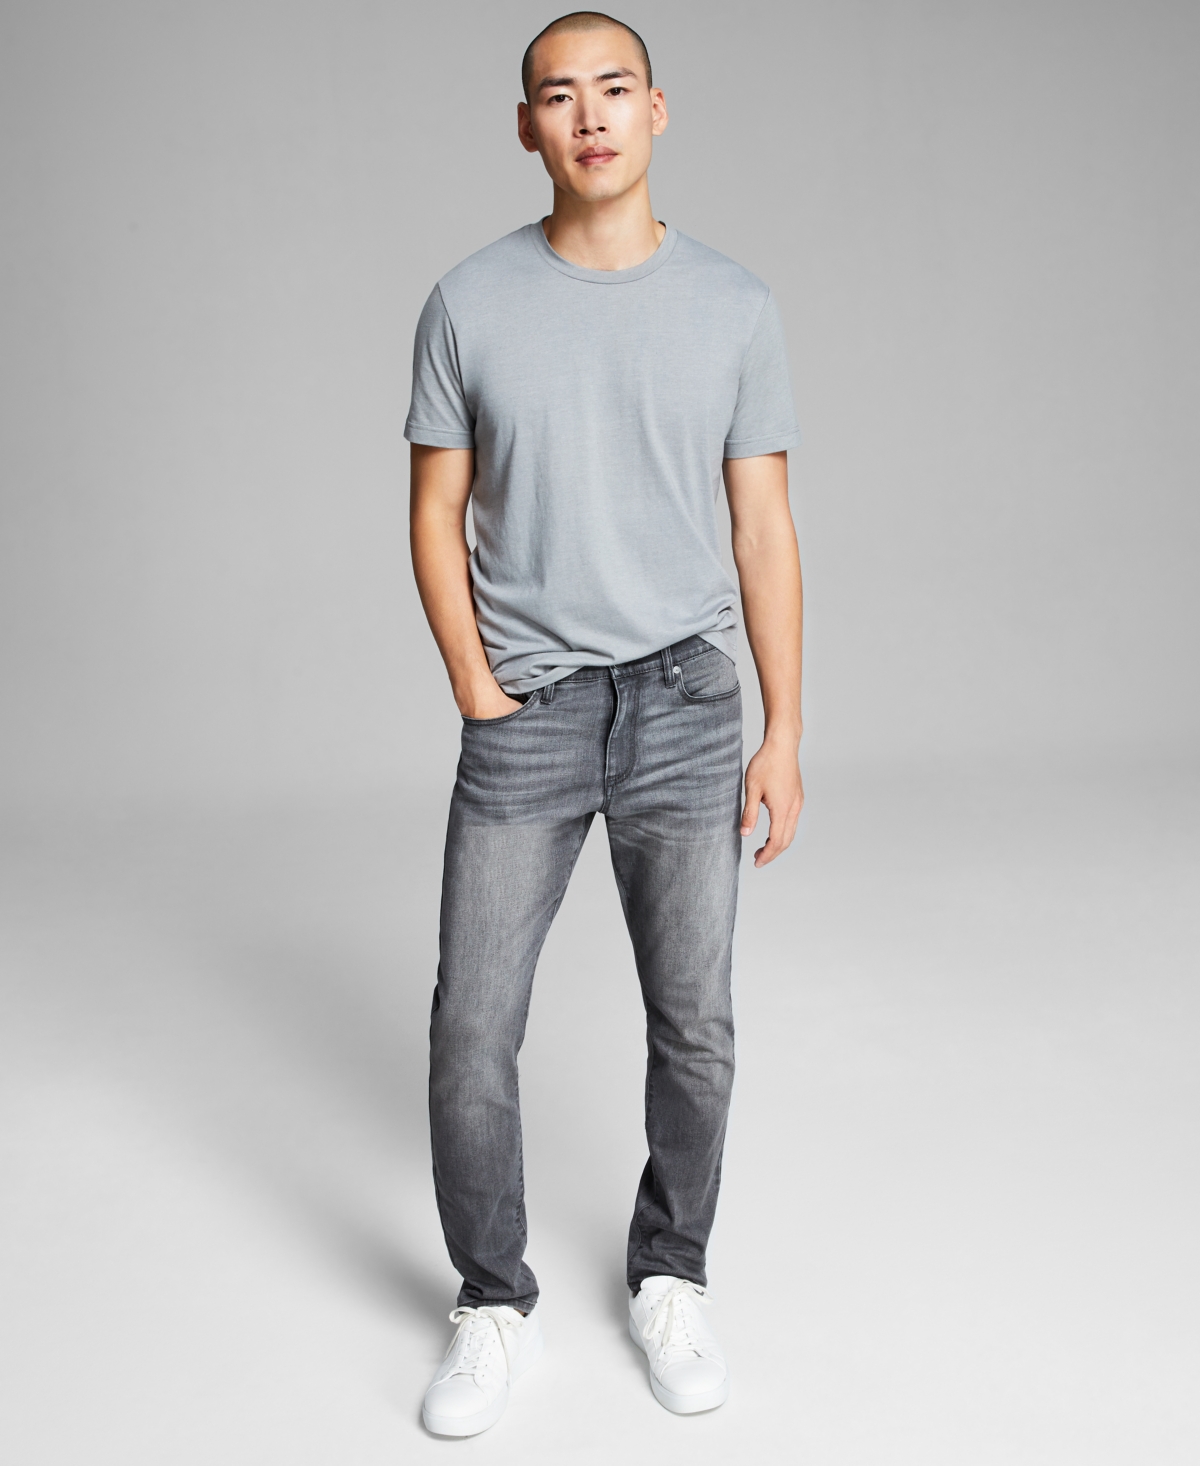 Men's Slim-Fit Stretch Jeans - Medium Grey Wash